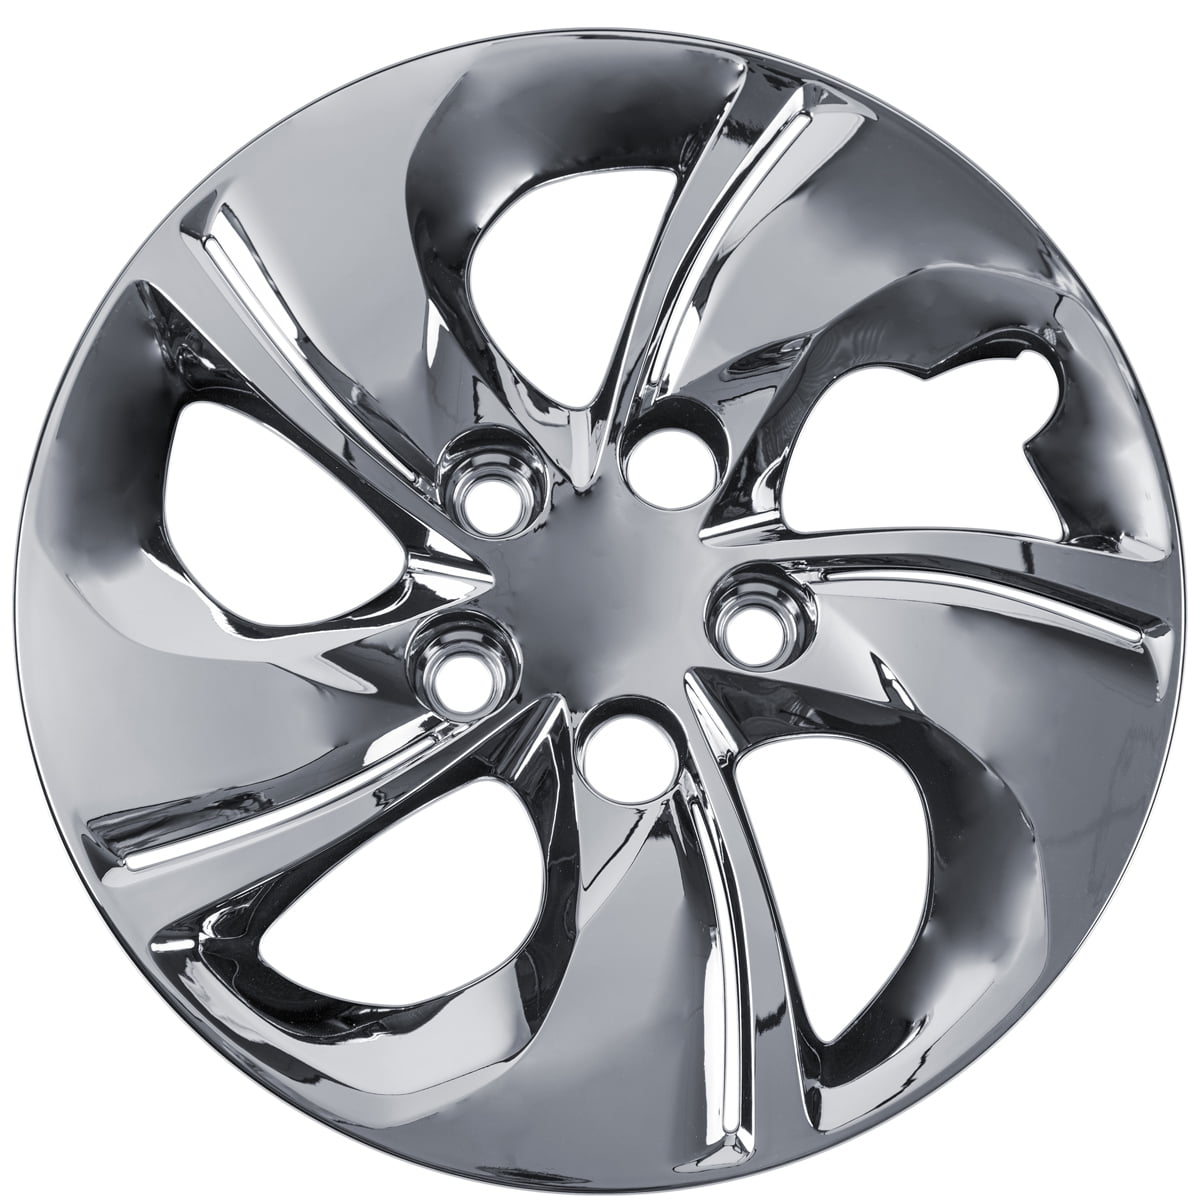 OxGord 15Inch Wheel Covers for Honda Civic, Chrome (Pack of 4)